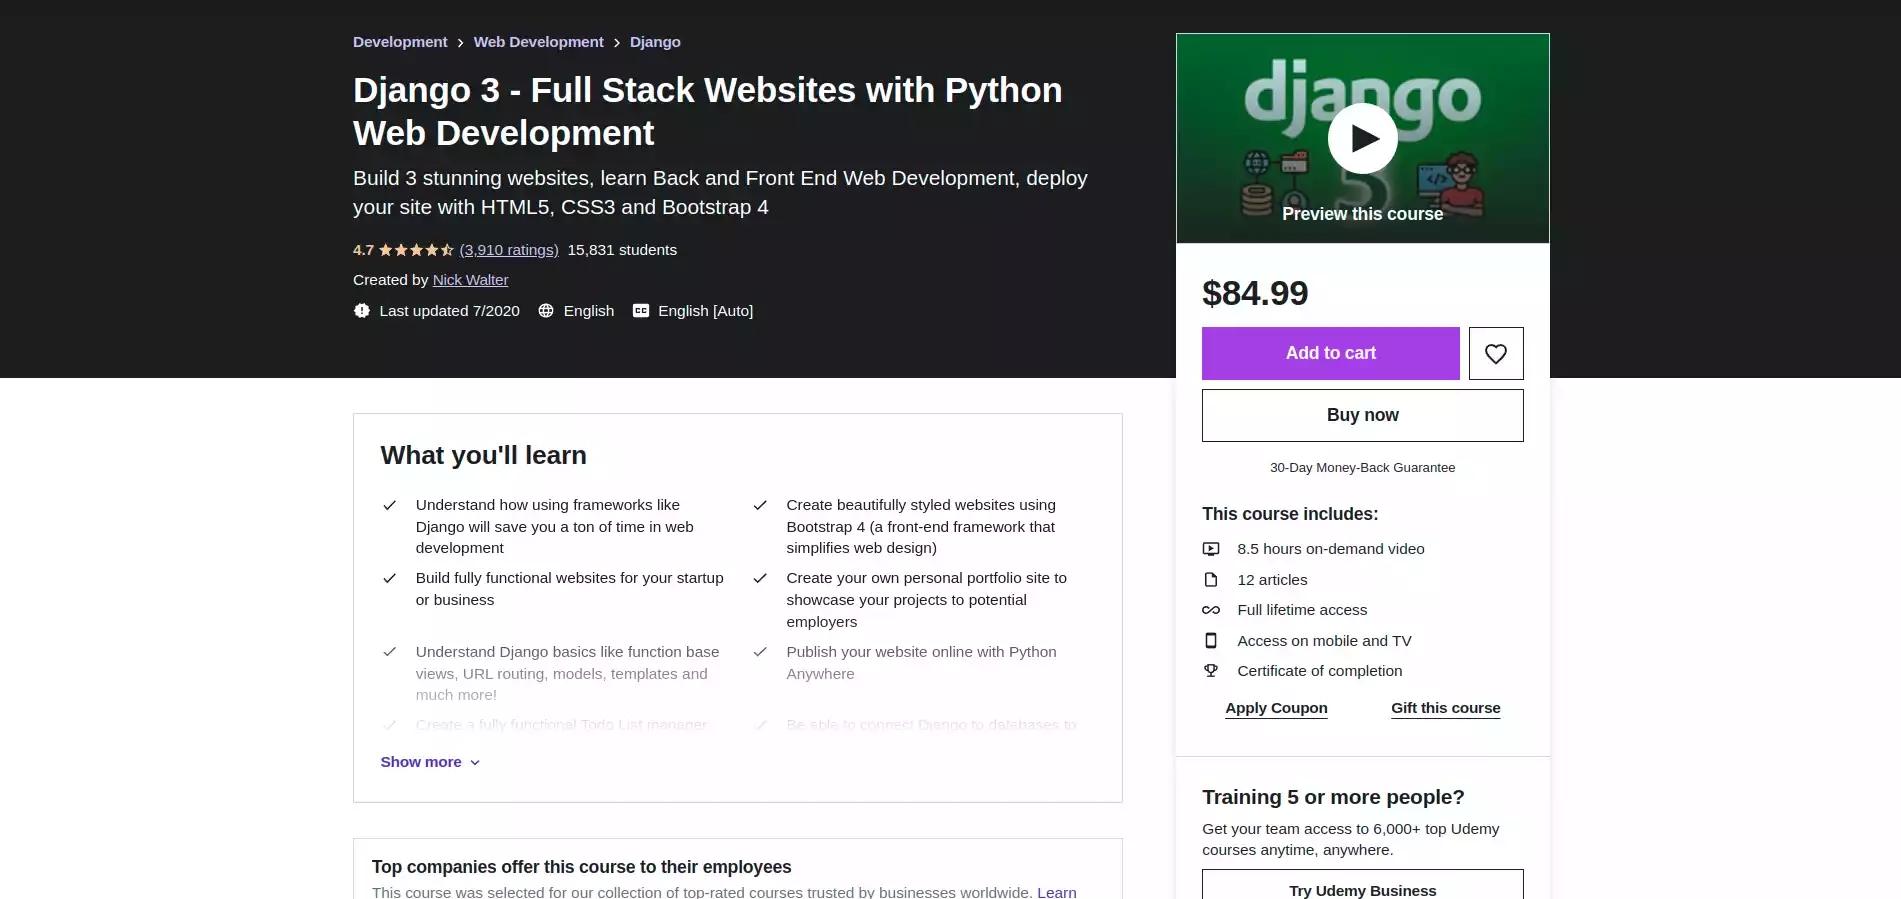 Django 3 full stack websites